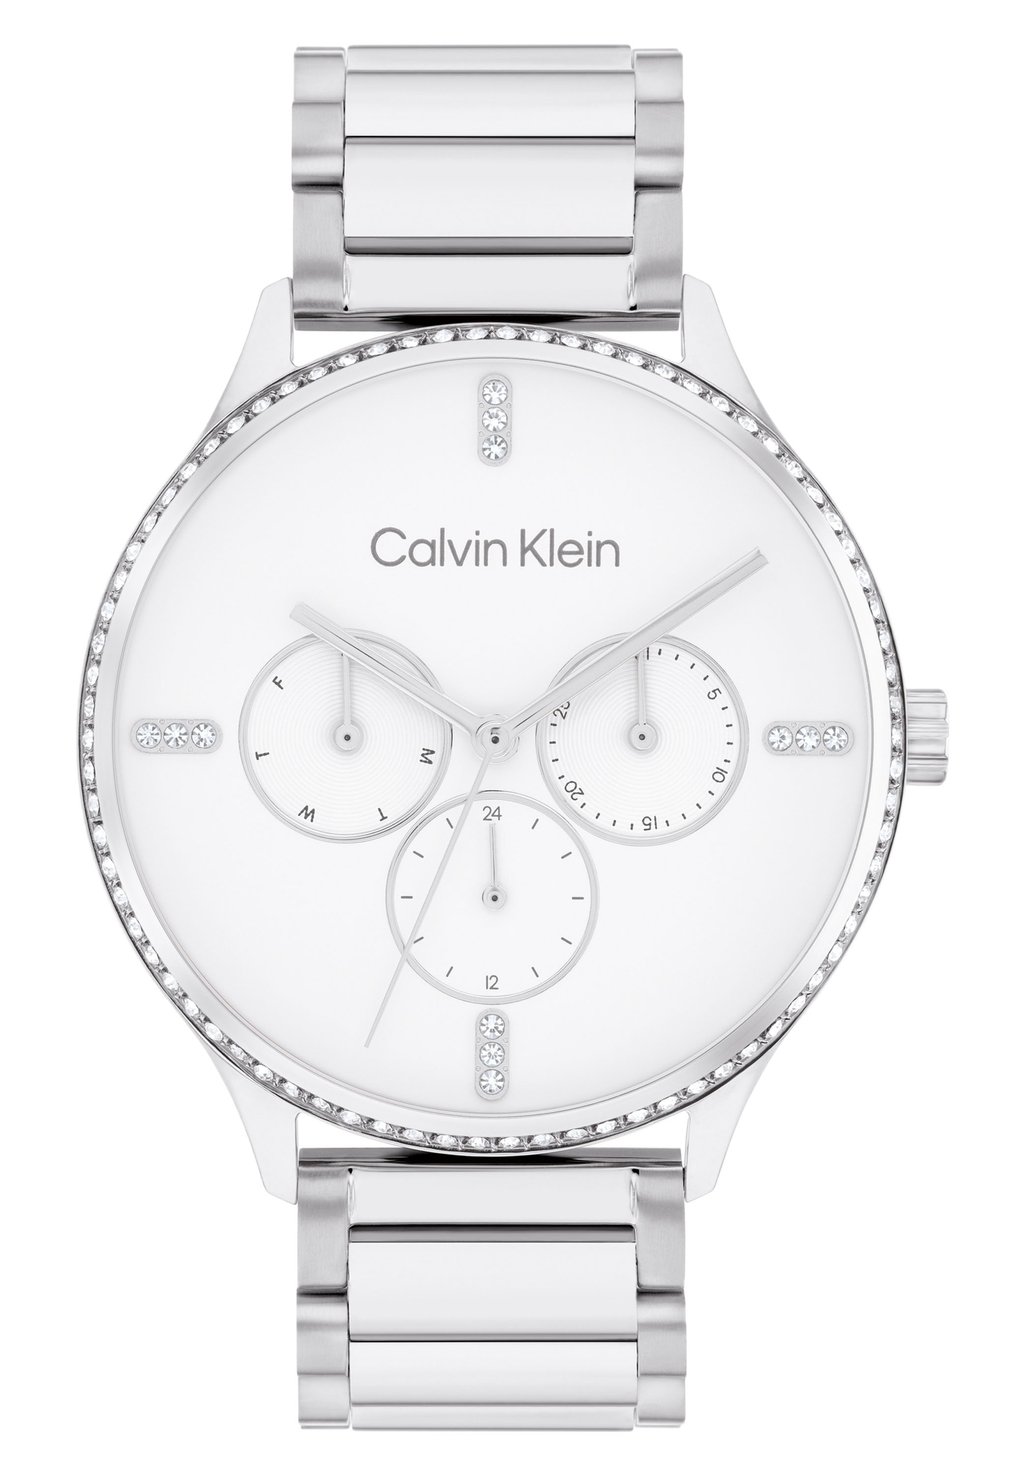 Часы Calvin Klein, цвет silber silber silber weiss цена и фото